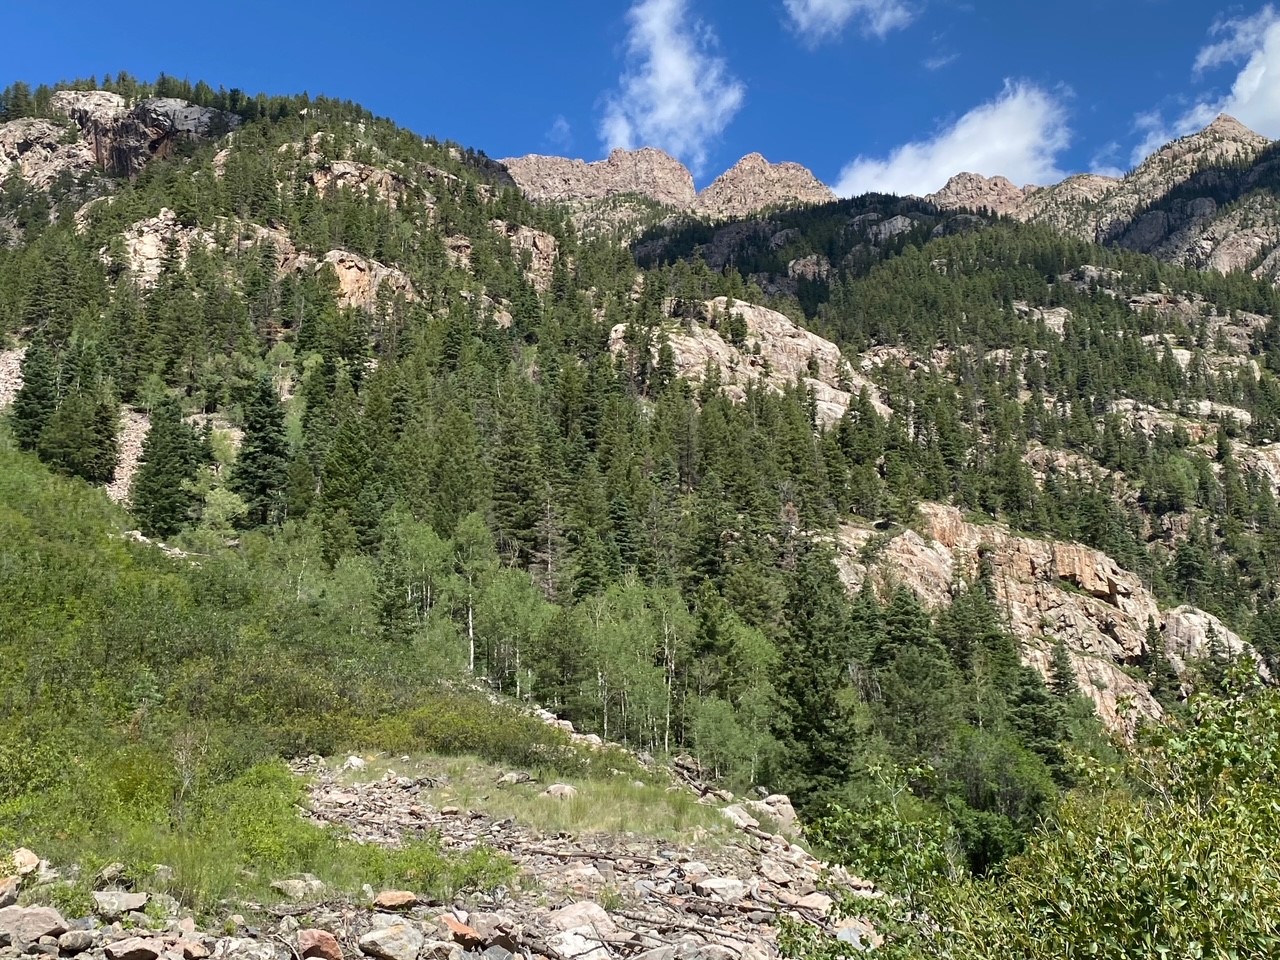 More scenic views of the terrain outside Durango.